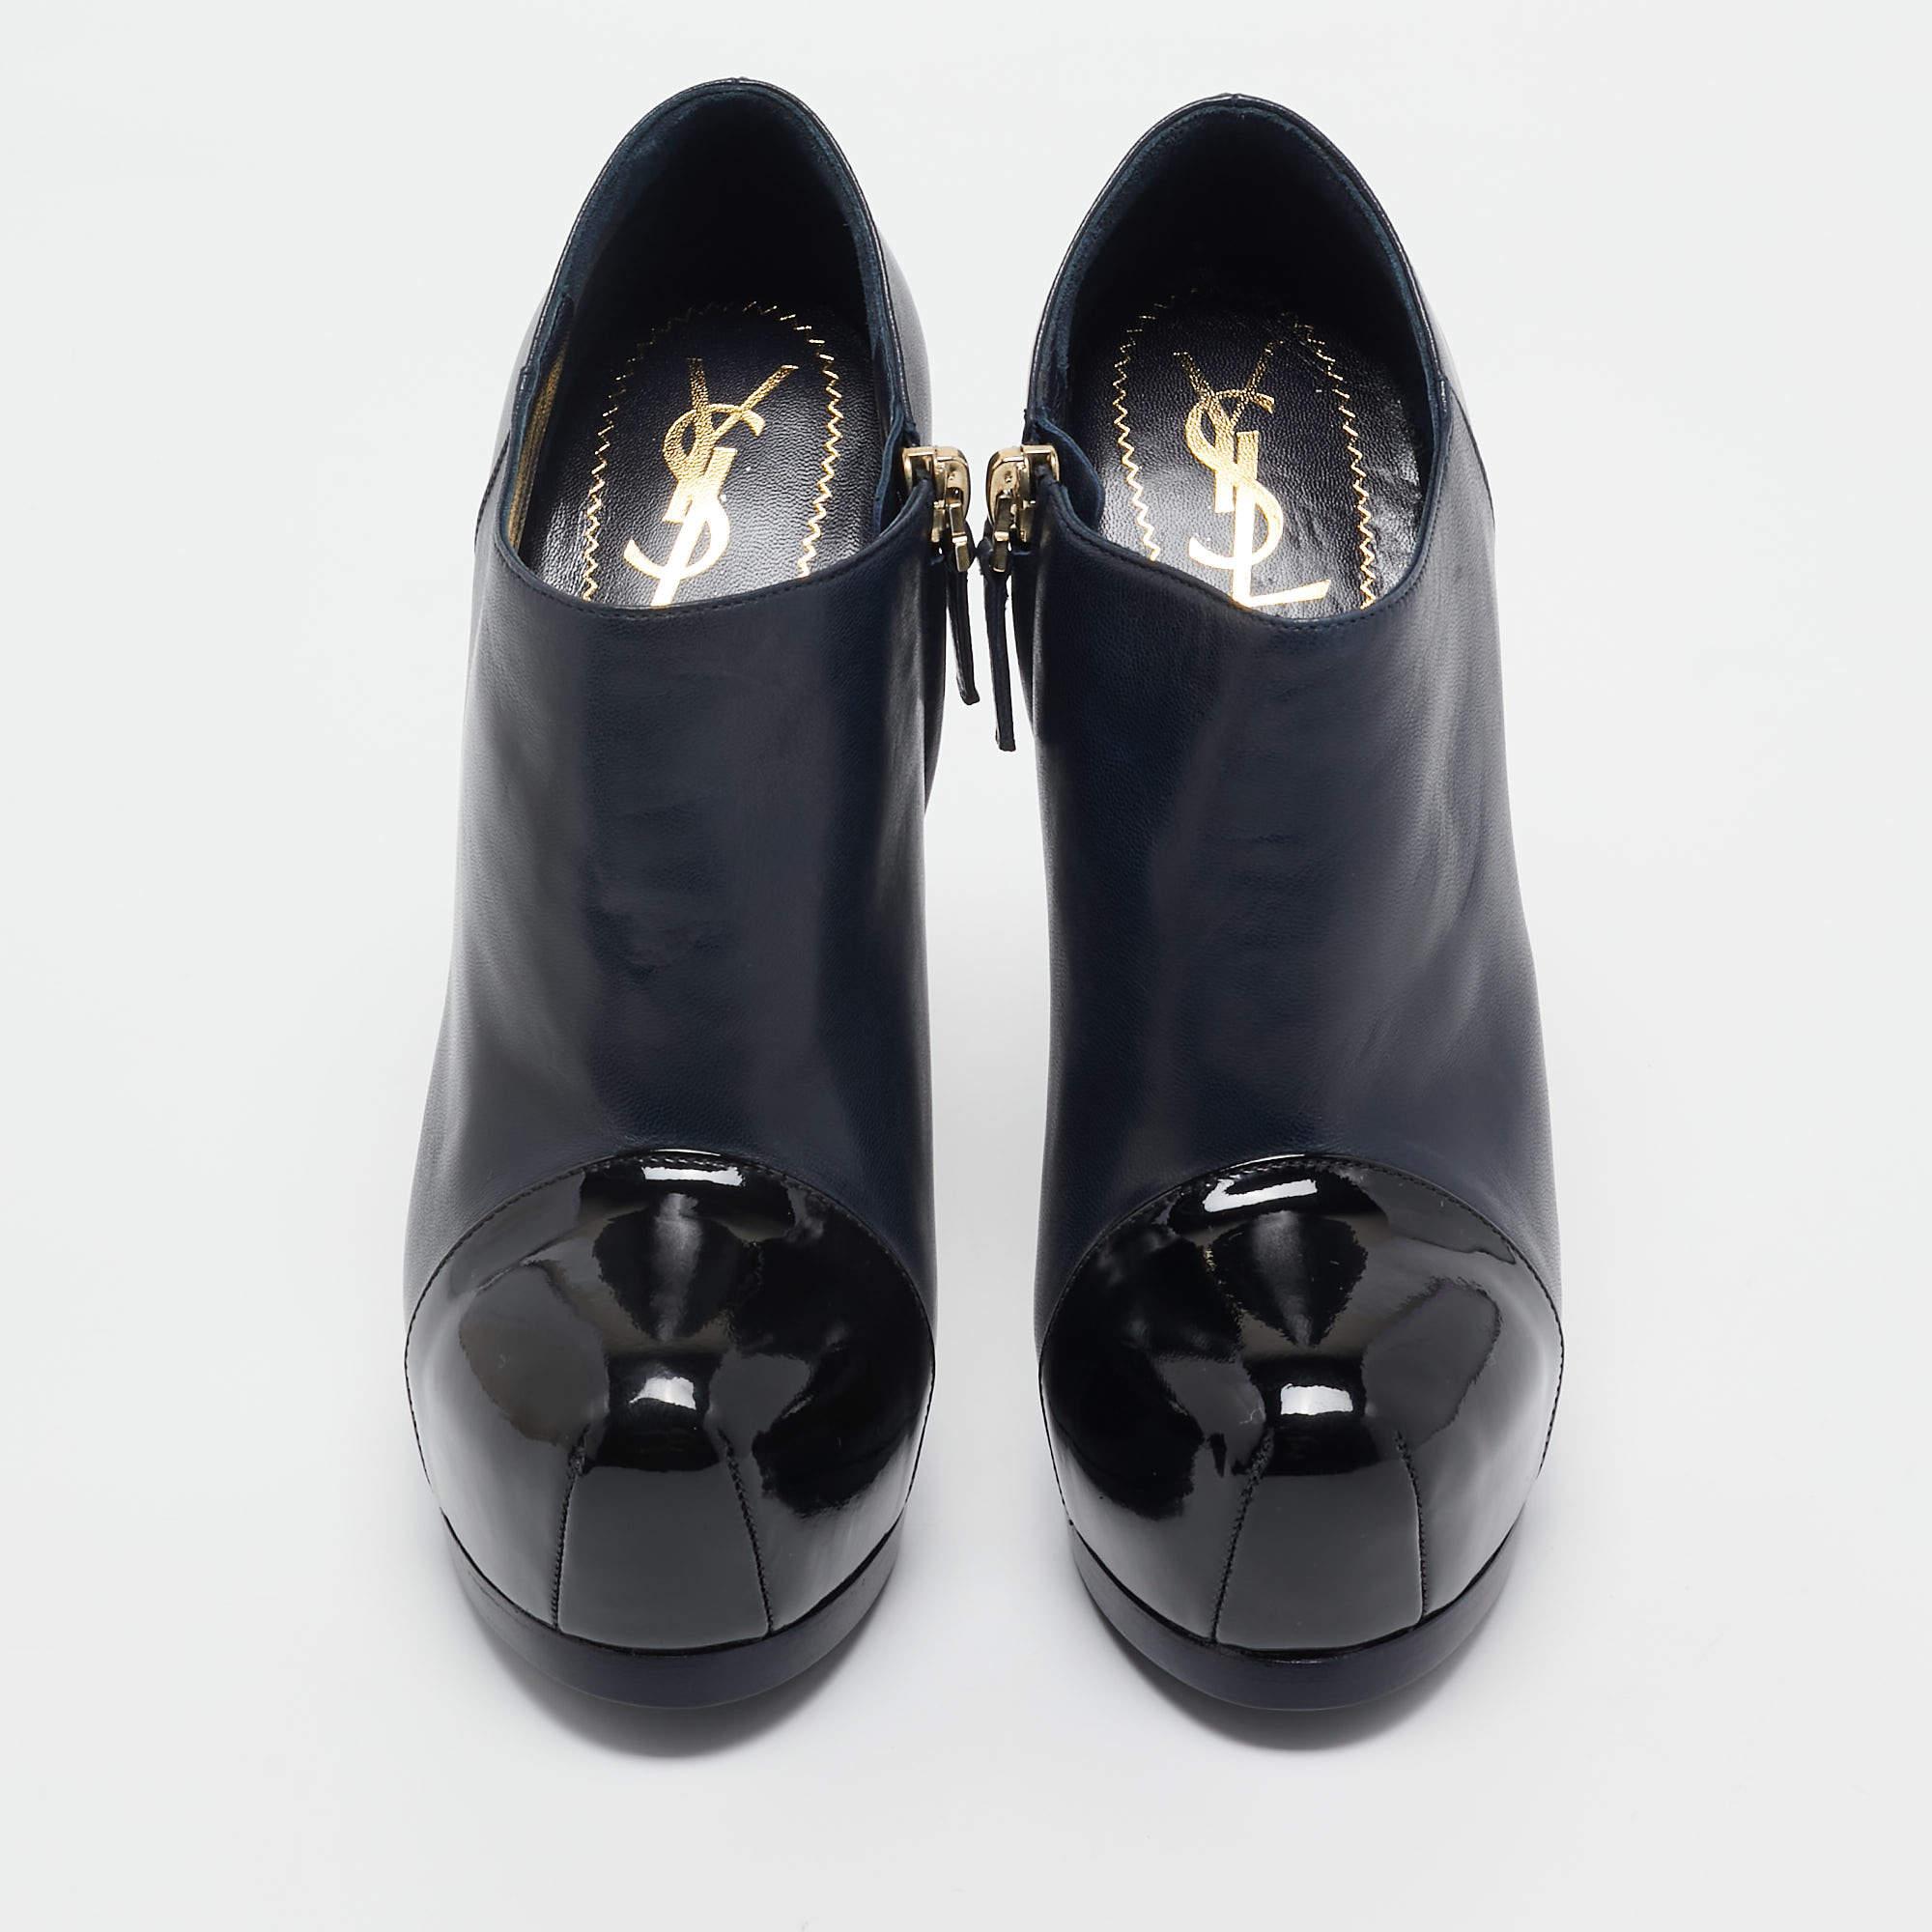 Yves Saint Laurent Patent Leather Tribute Platform Ankle Boots Size 36 For Sale 2